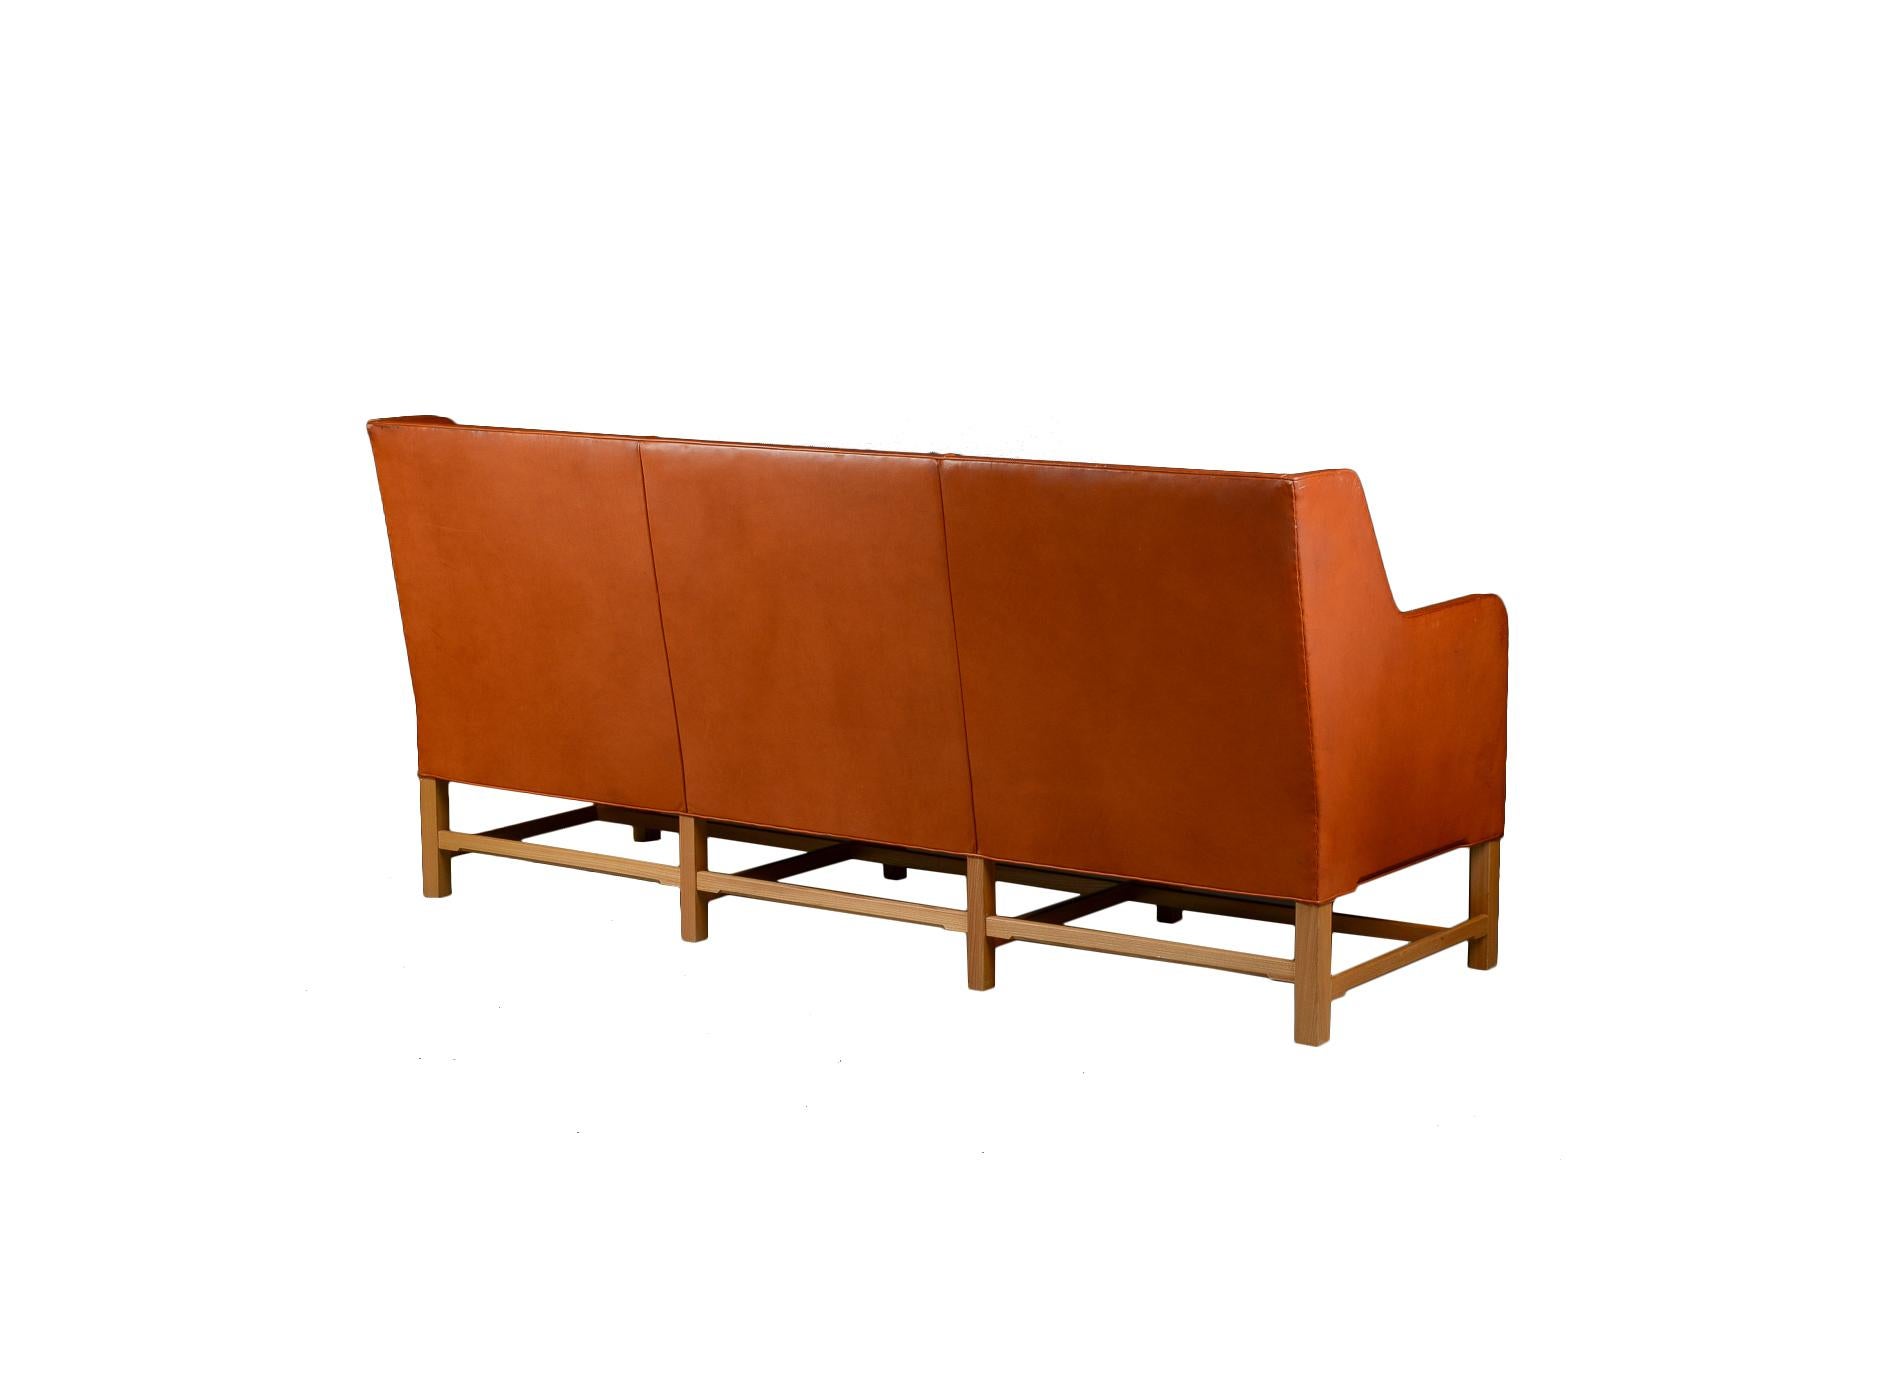 Scandinavian Modern Kaare Klint Sofa Model 5011 Original Cognac Leather for Rud Rasmussen Denmark For Sale